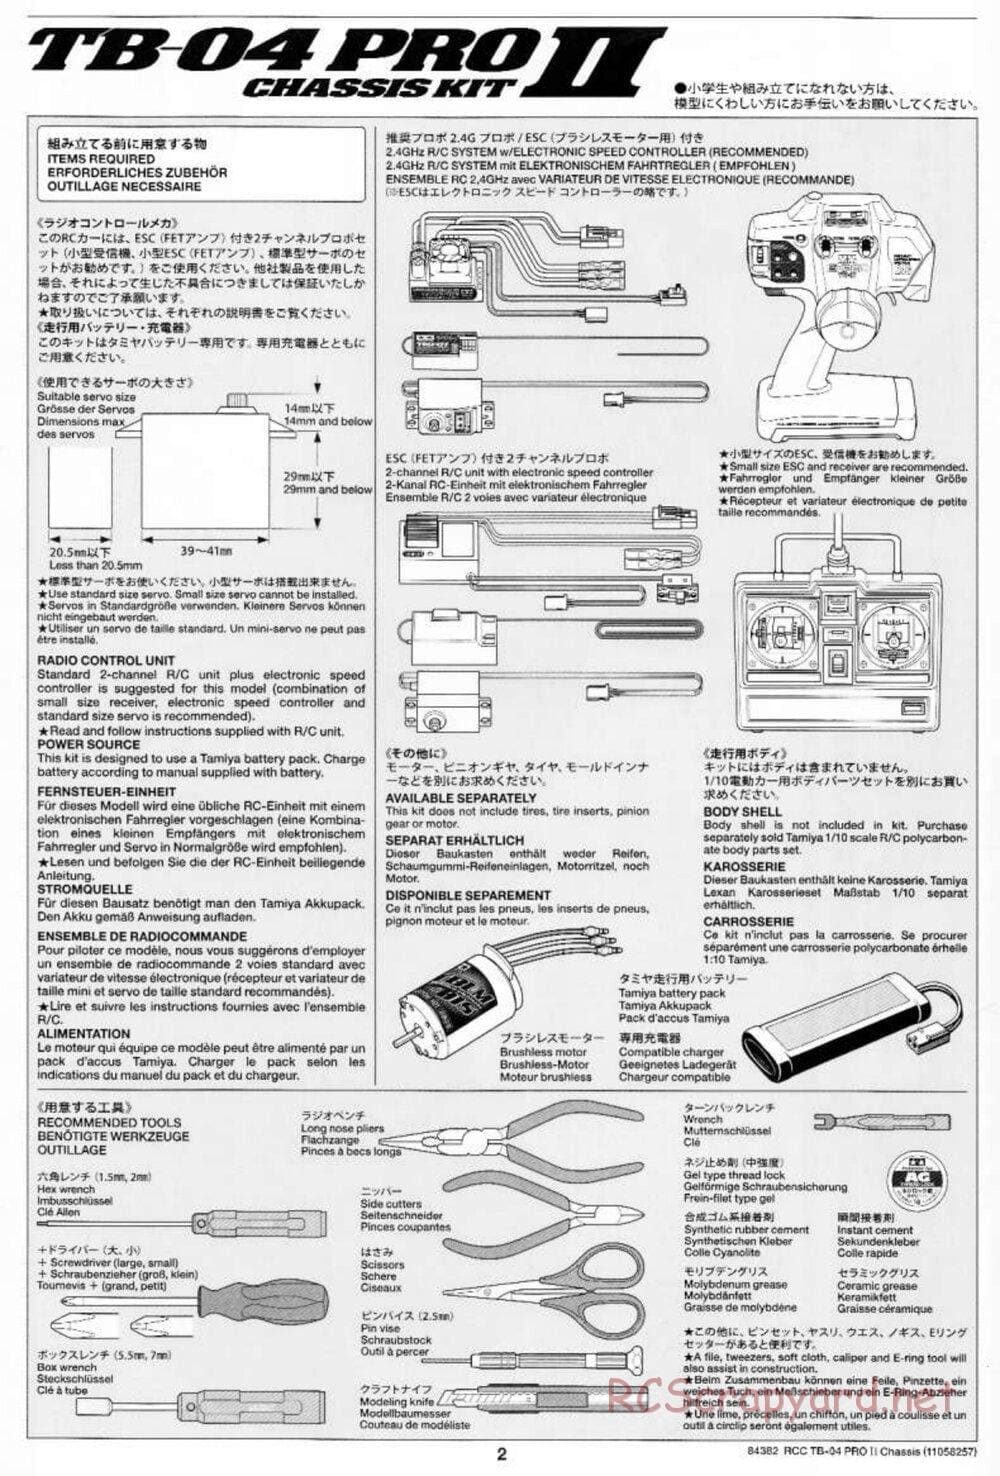 Tamiya - TB-04 Pro II Chassis - Manual - Page 2